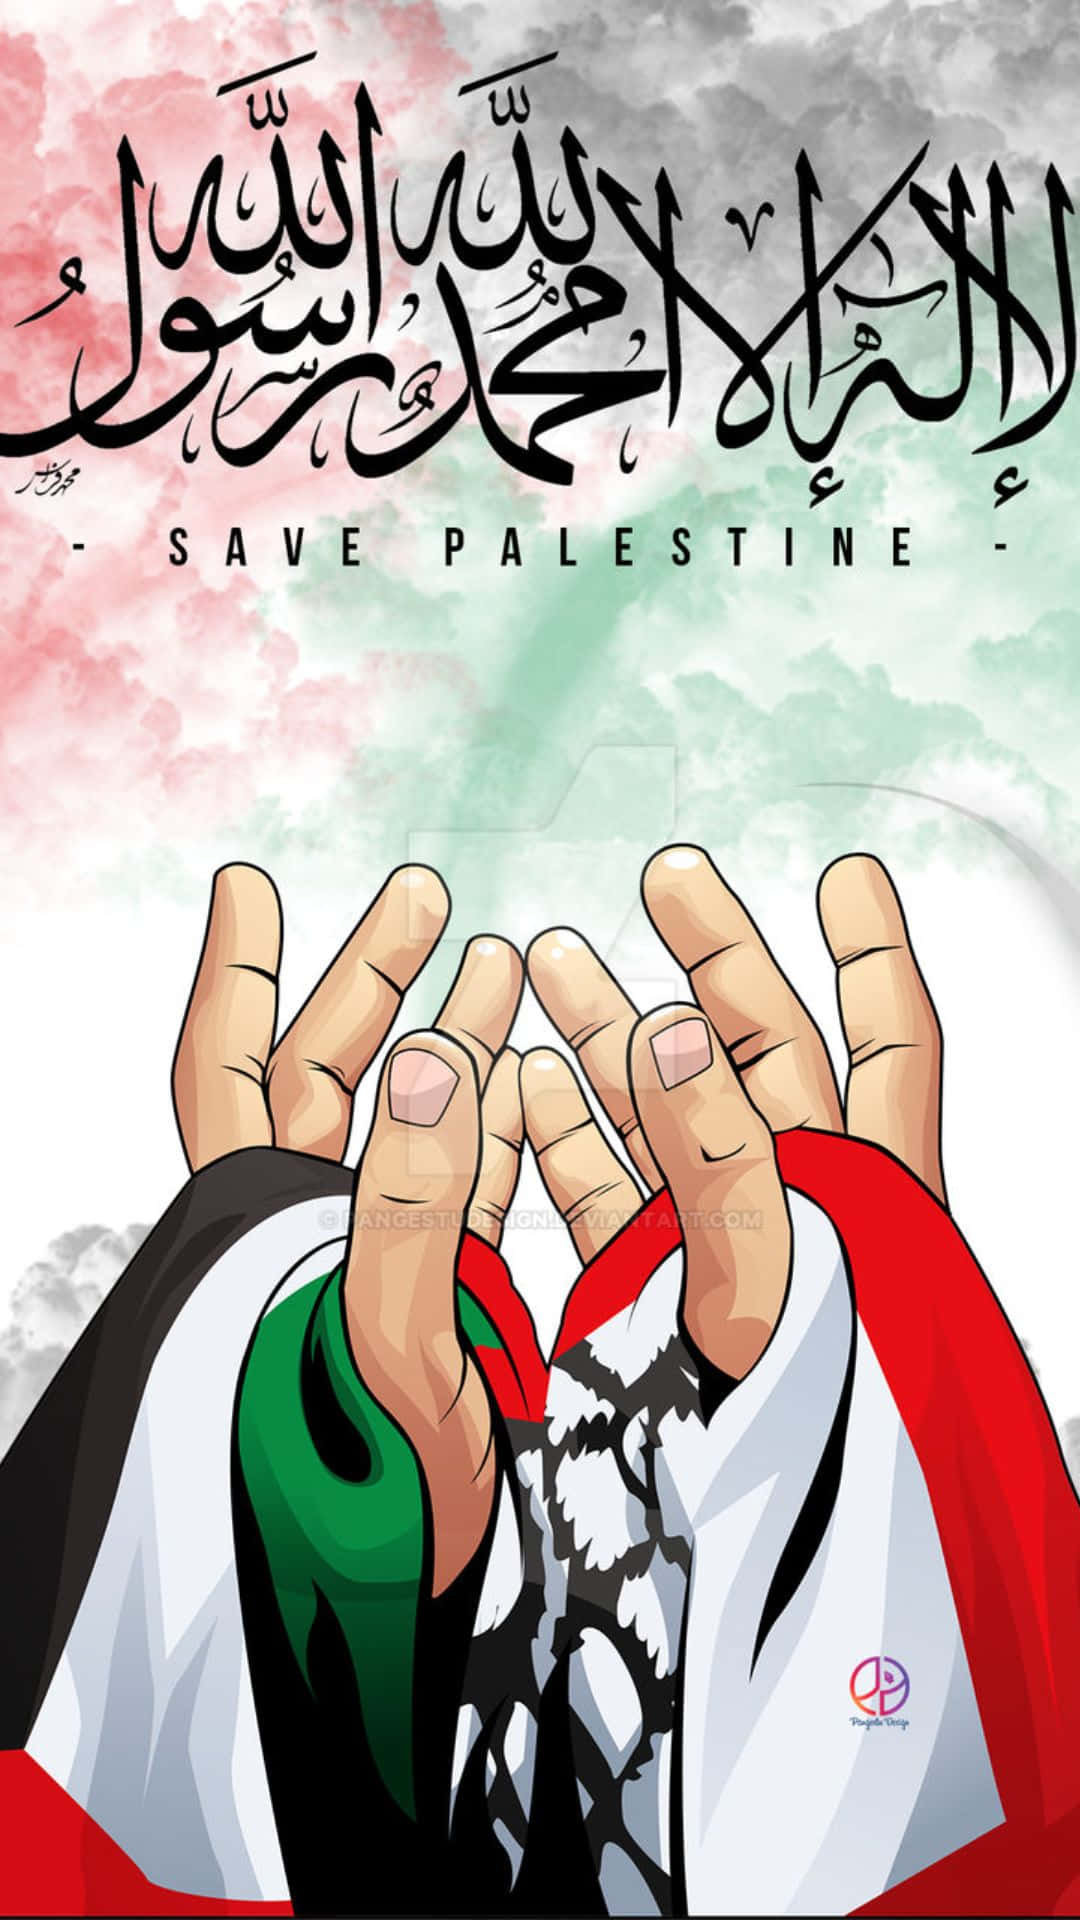 Benvenutinella Storica Palestina